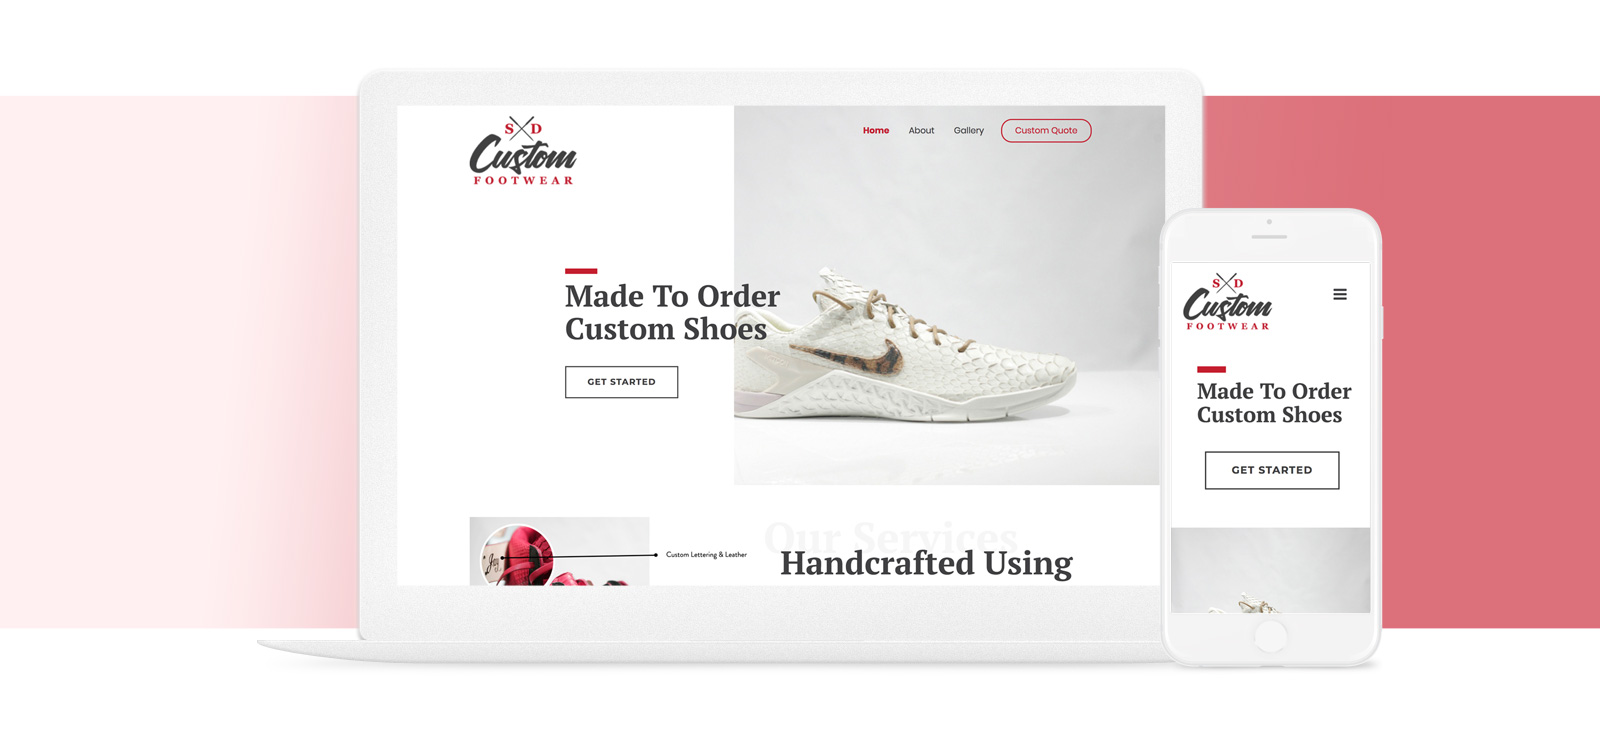 SD Custom Footwear Desktop & Mobile Mockup